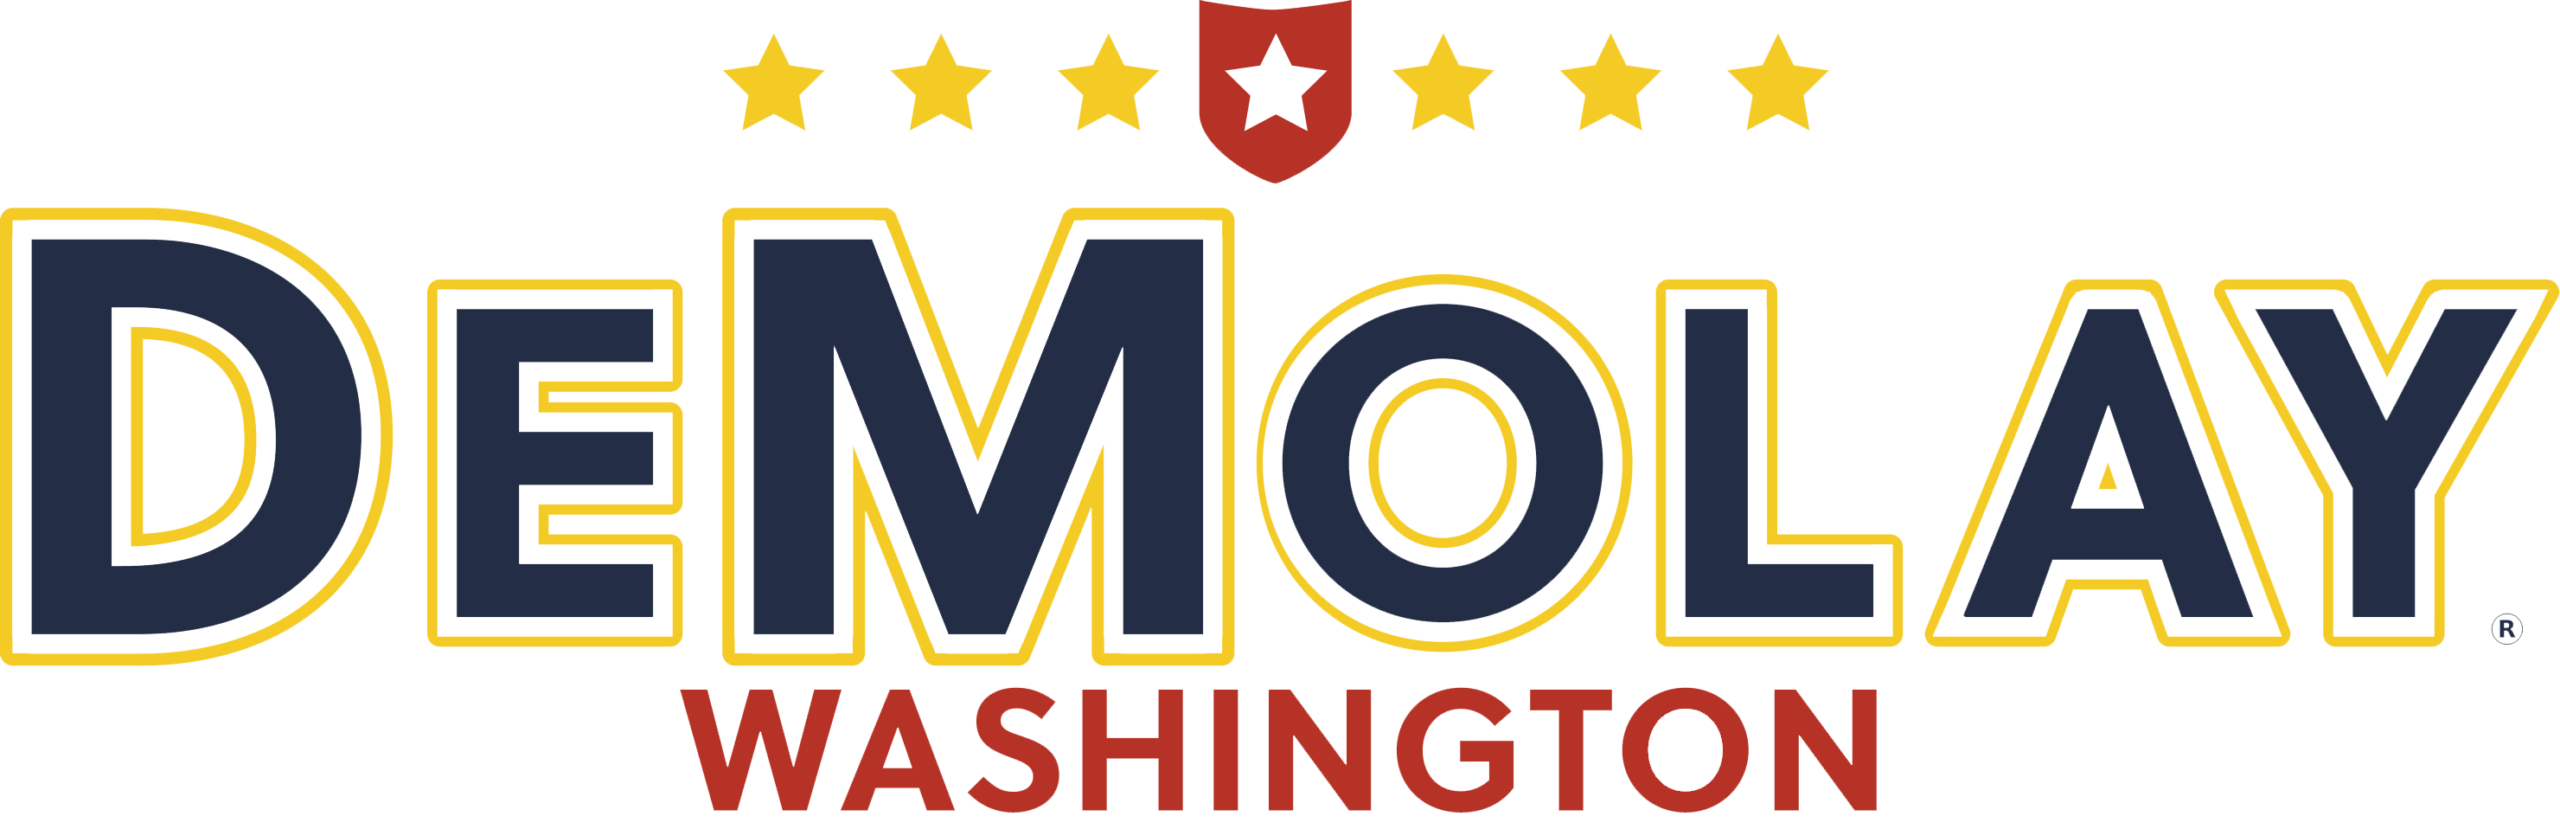 DeMolay in Washington logo